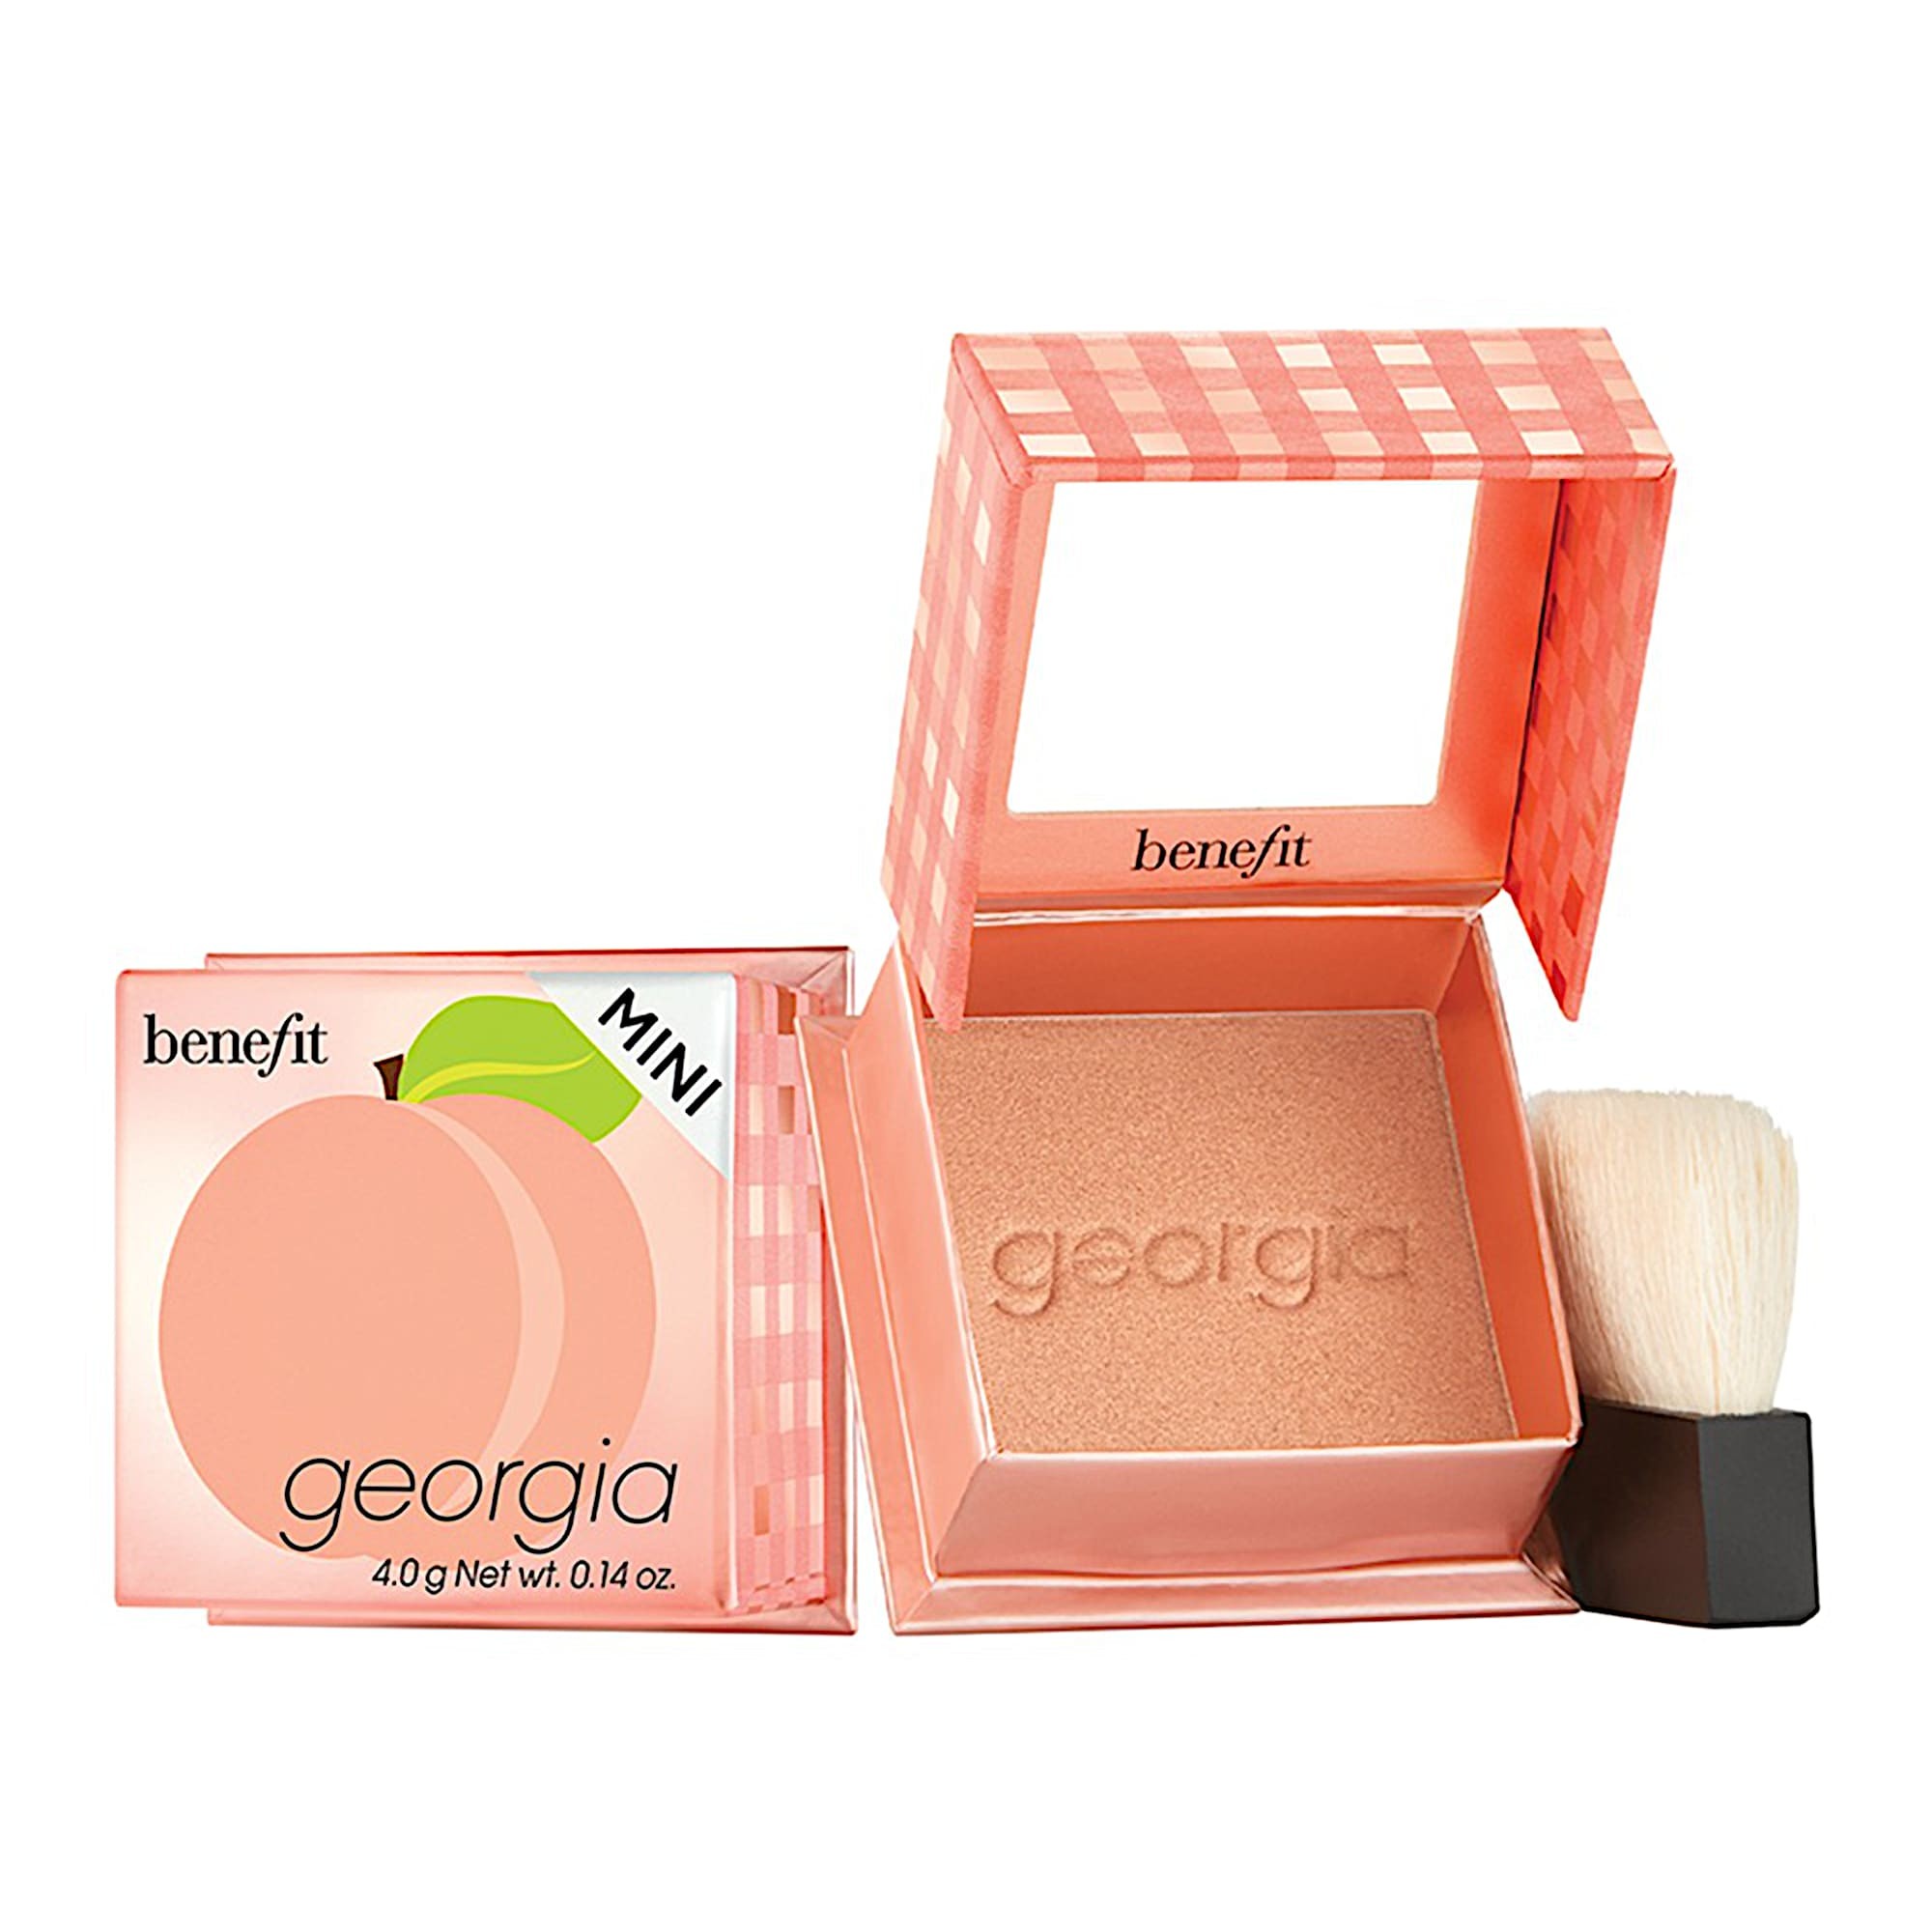 Benefit Cosmetics Mini Georgia Blush